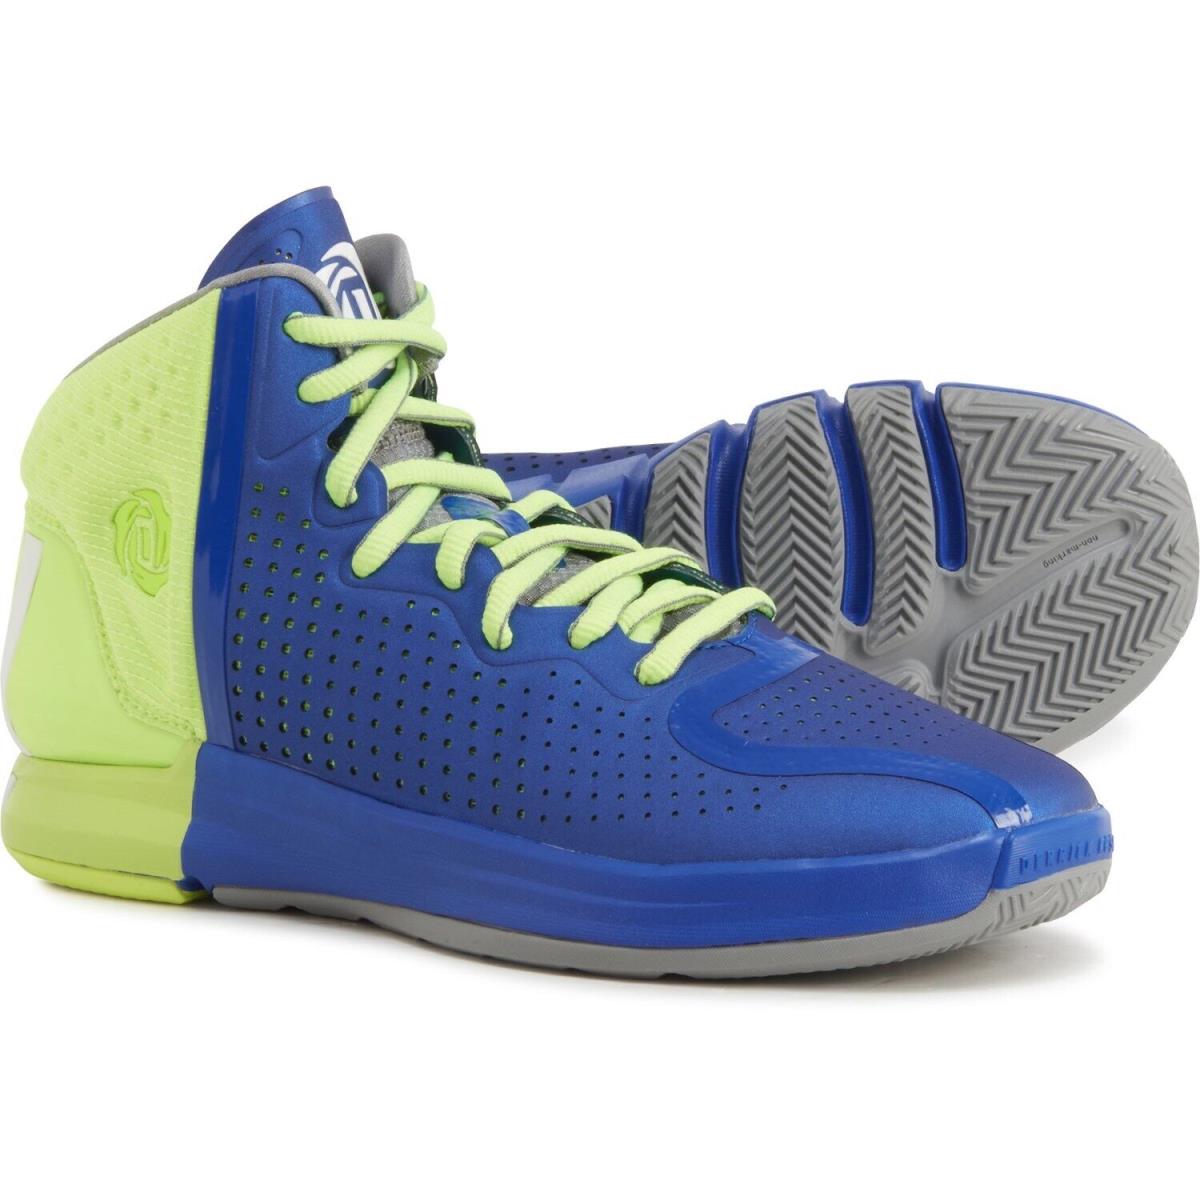 Adidas D Rose 4 Restomod Basketball Shoes For Men Size 8